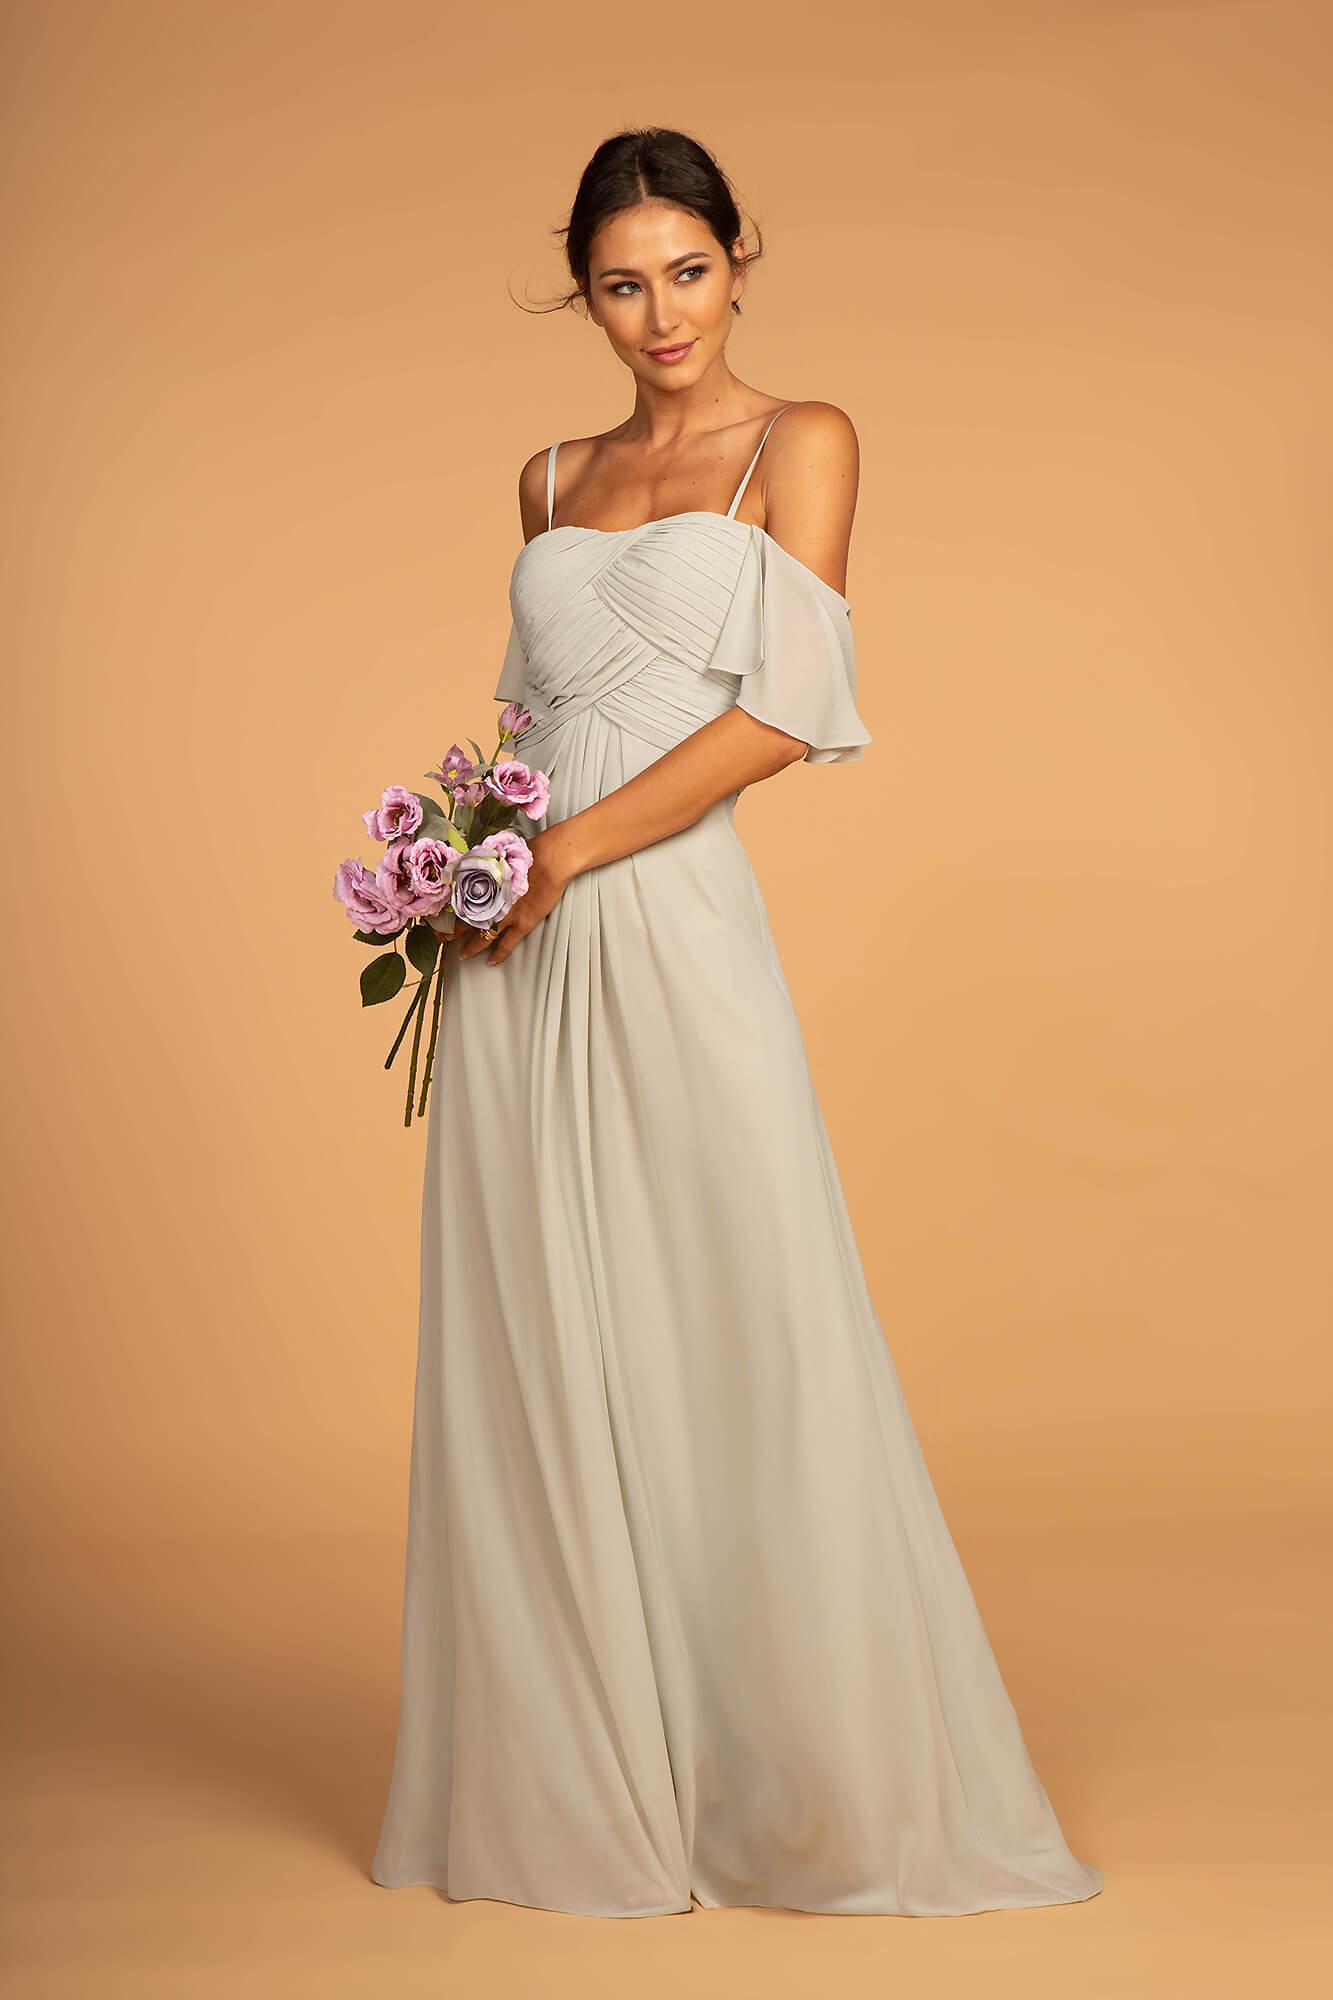 Formal Chiffon Long Dress Bridesmaid - The Dress Outlet Elizabeth K